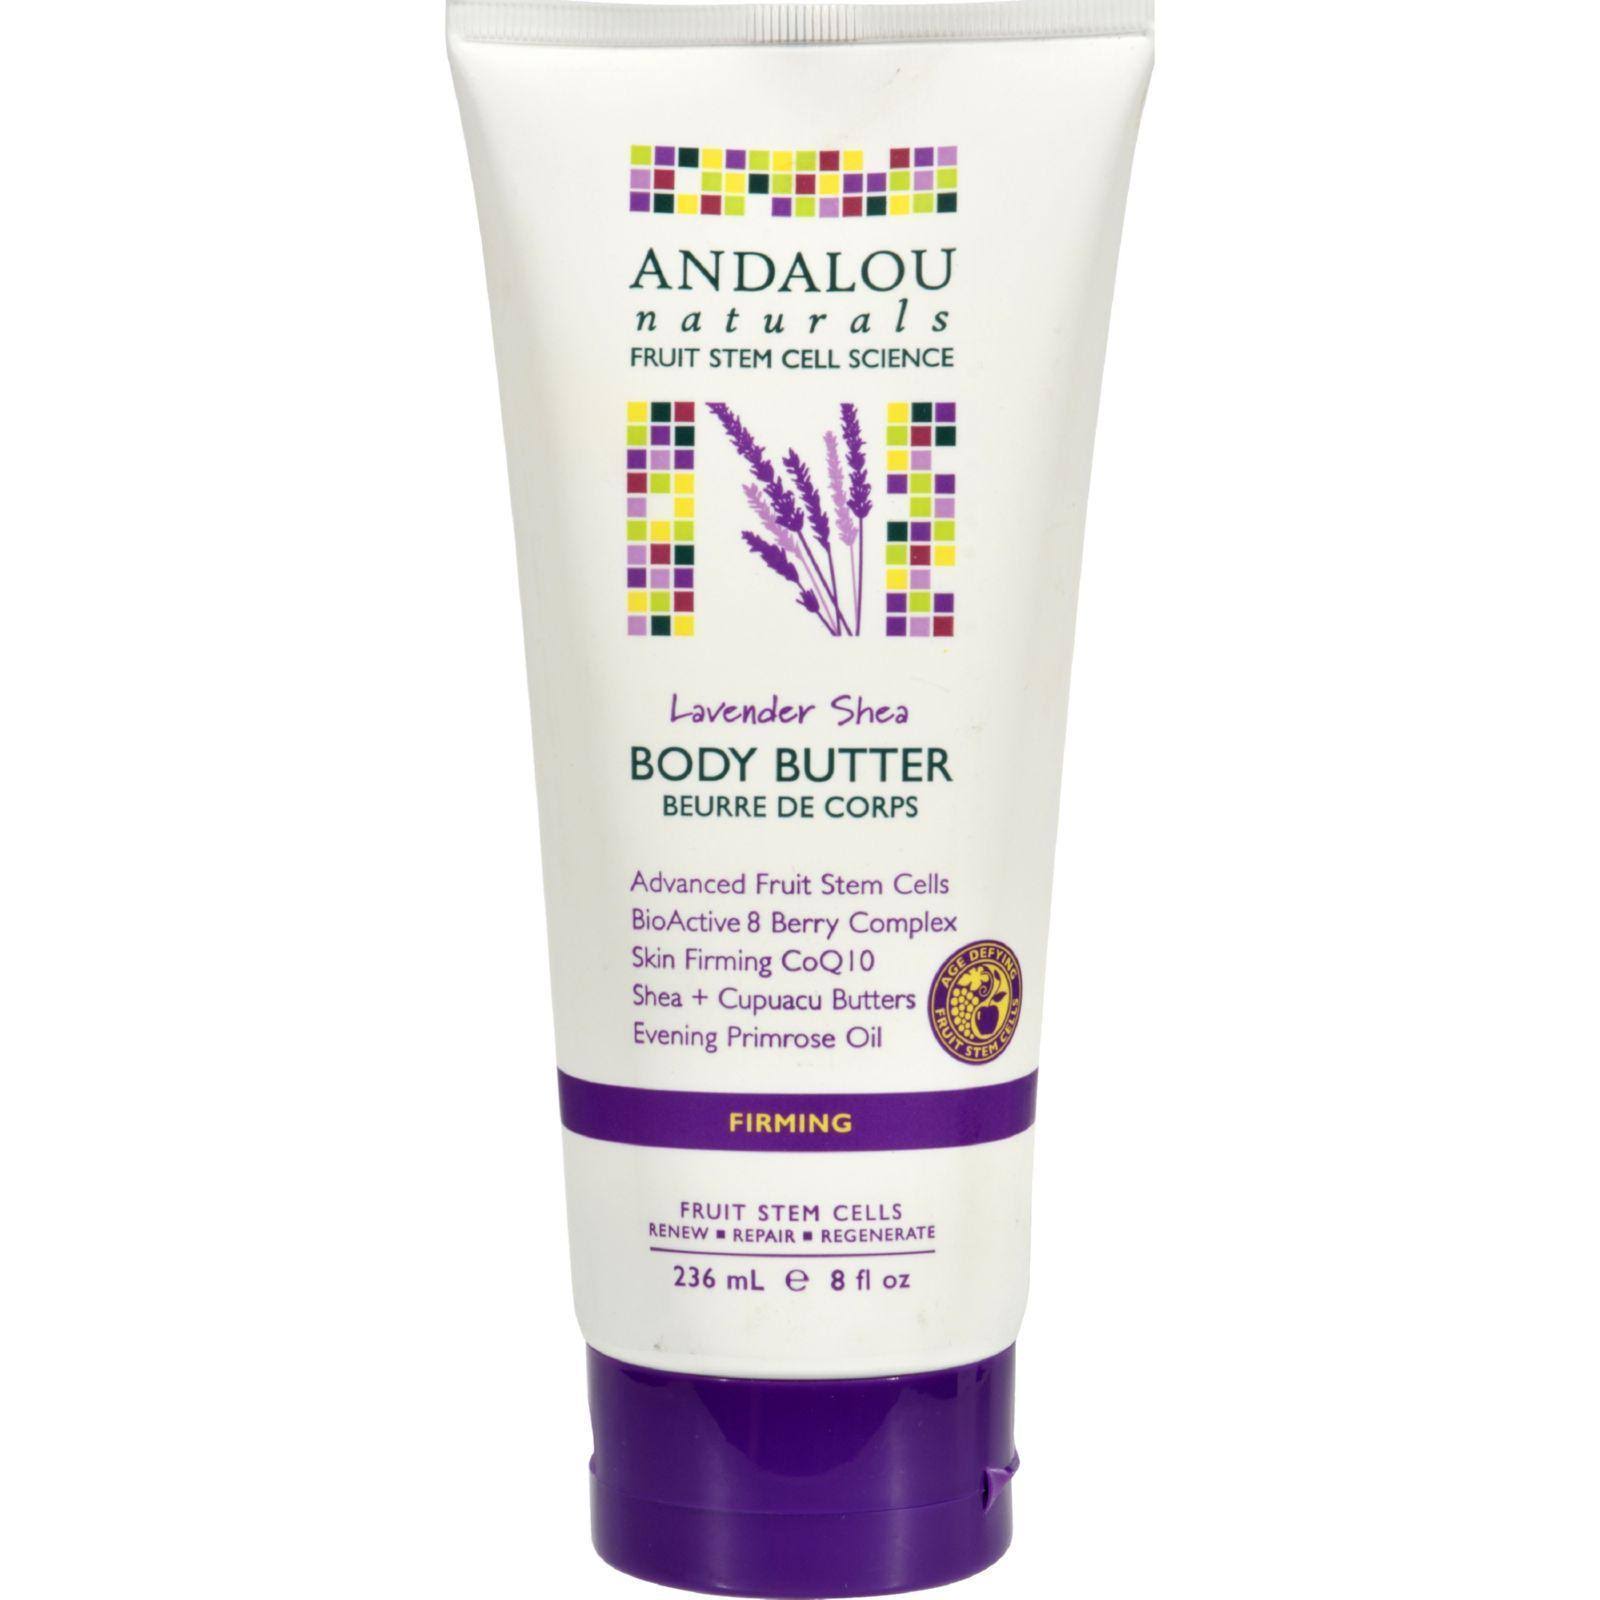 Andalou Naturals Firming Body Butter - Lavender Shea, 8oz